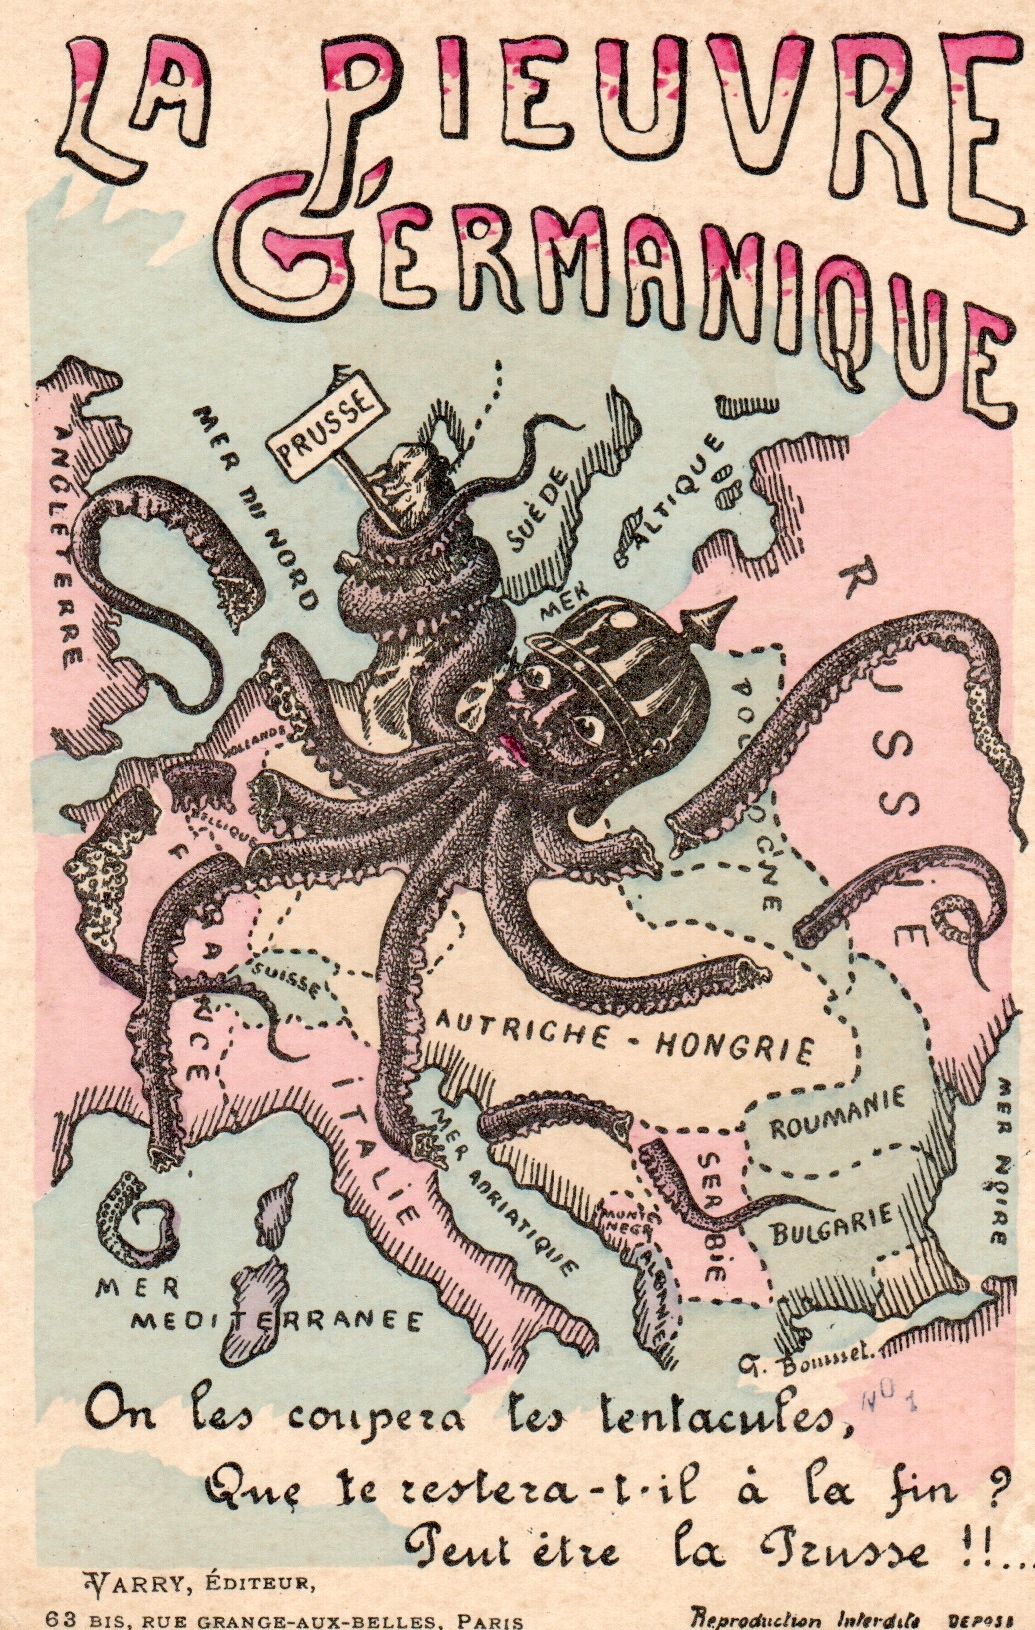 La Pieuvre Germanique - Idea Rare Maps